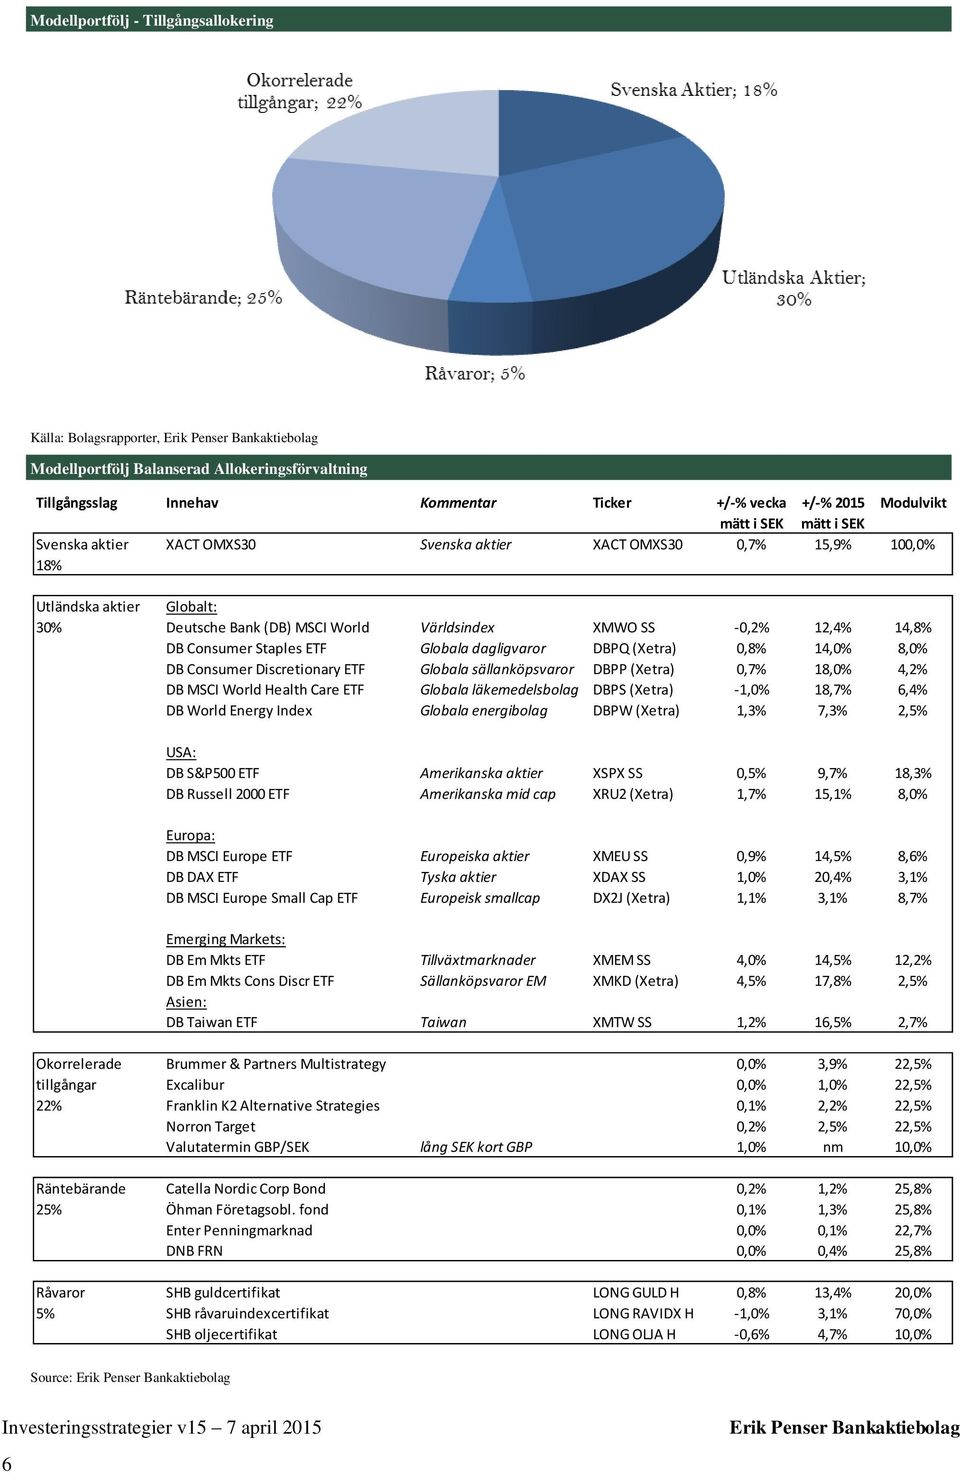 14,8% DB Consumer Staples ETF Globala dagligvaror DBPQ (Xetra) 0,8% 14,0% 8,0% DB Consumer Discretionary ETF Globala sällanköpsvaror DBPP (Xetra) 0,7% 18,0% 4,2% DB MSCI World Health Care ETF Globala